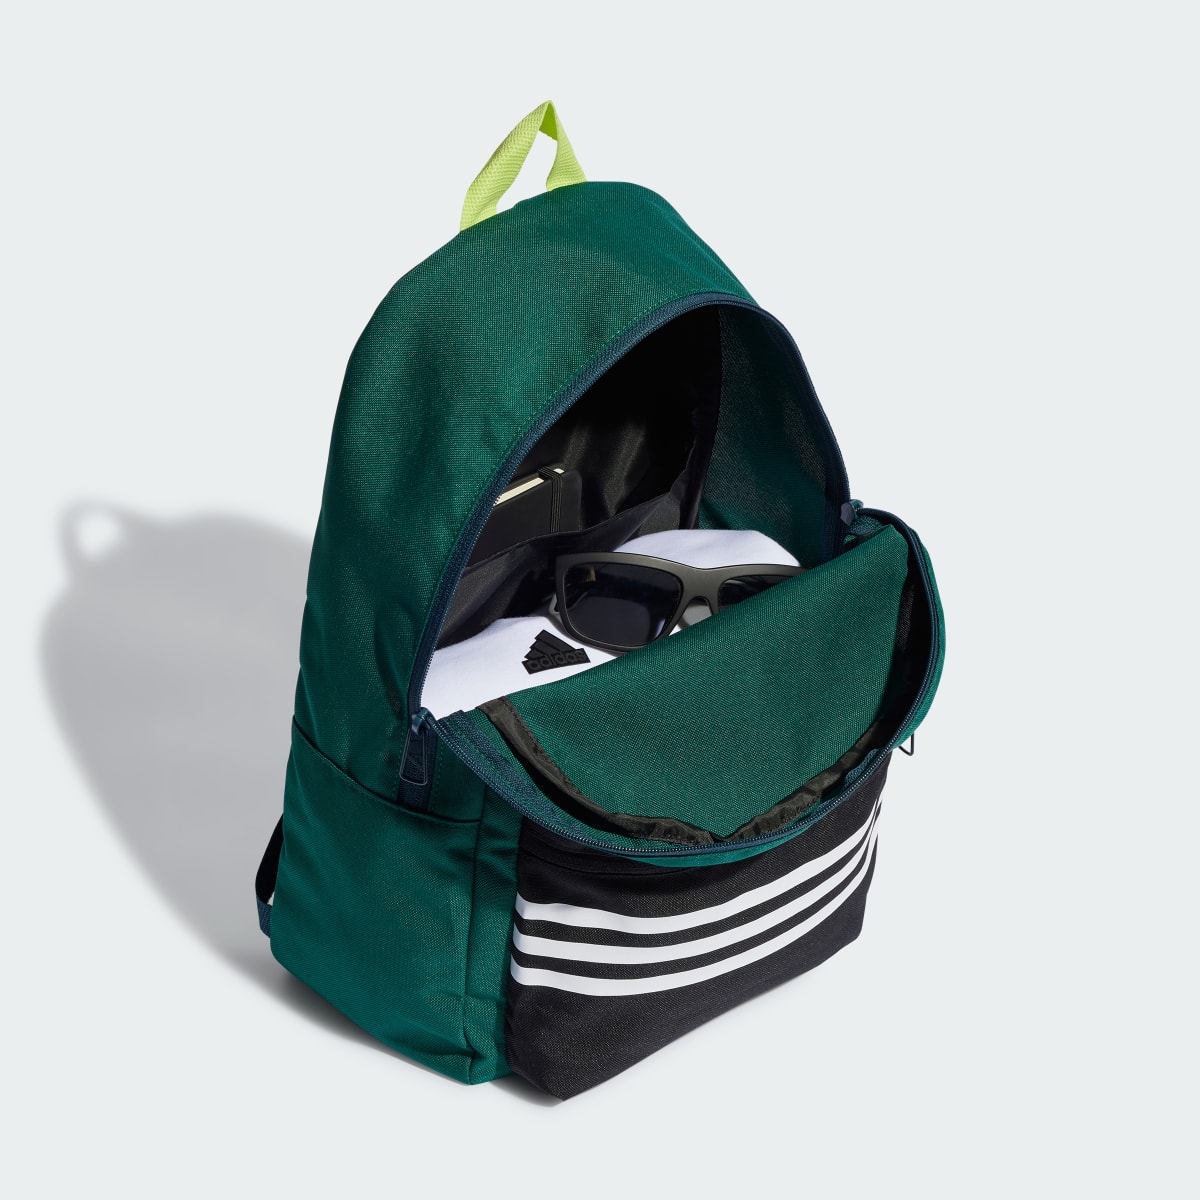 Adidas Brand Love Backpack. 5